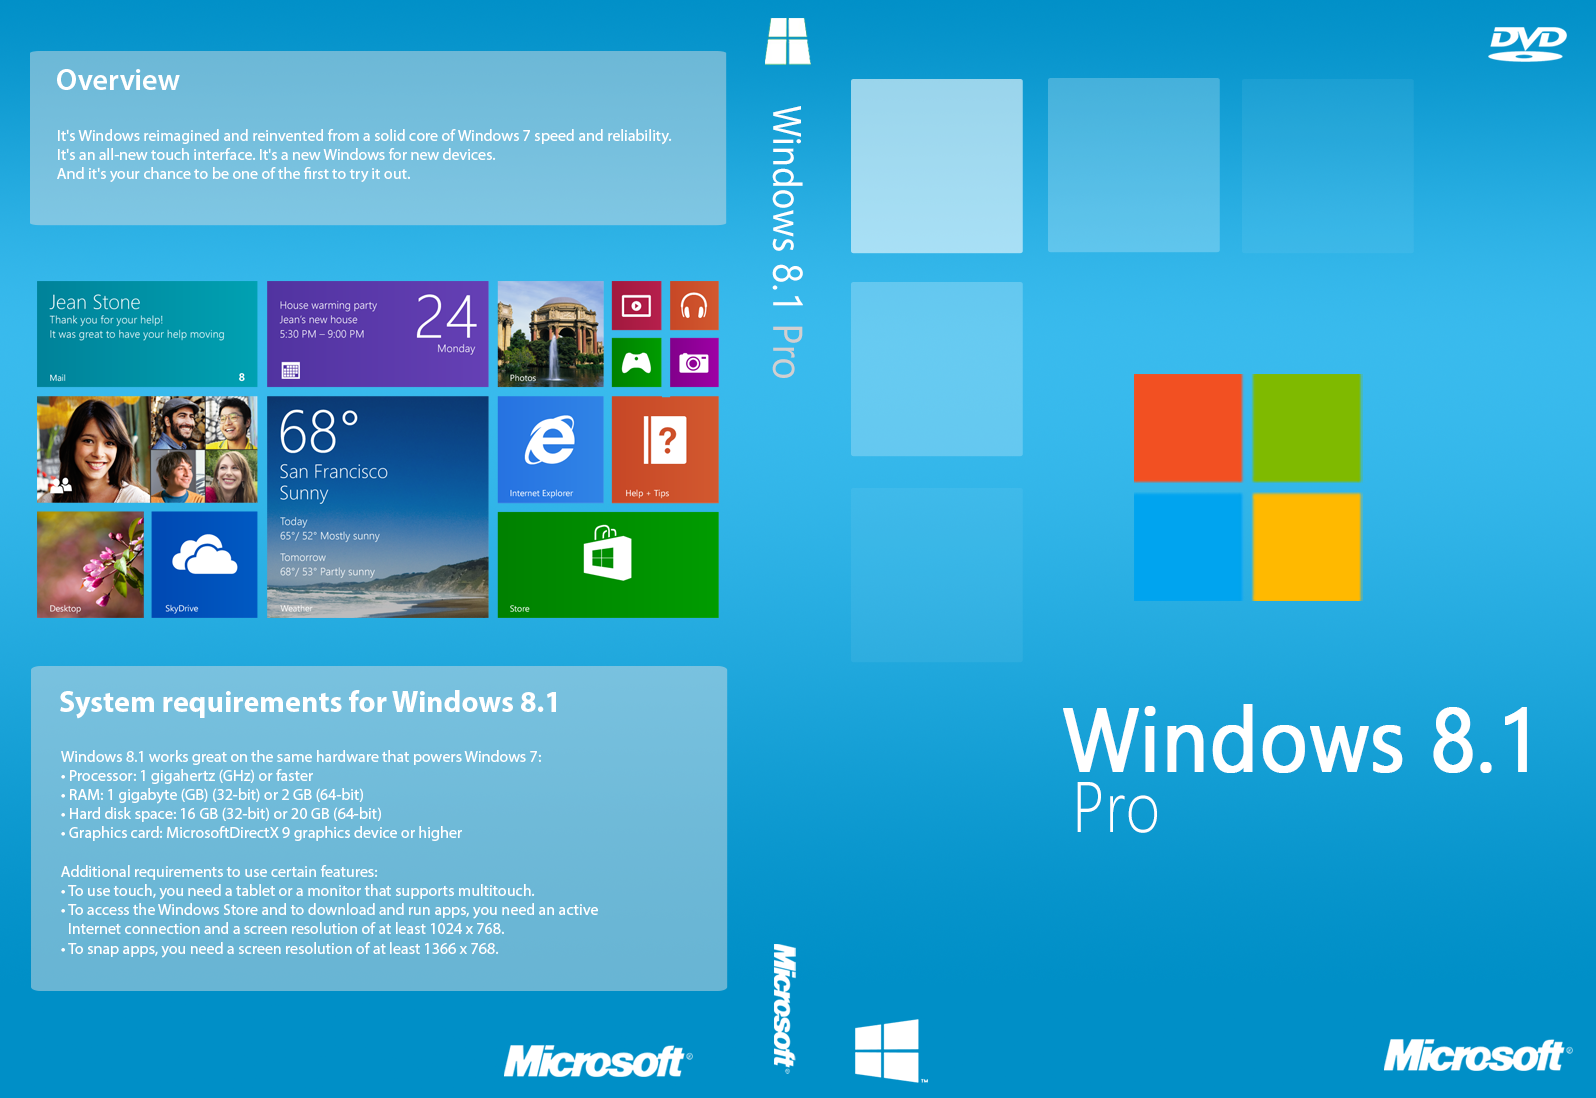 windows 8.1 pro download key